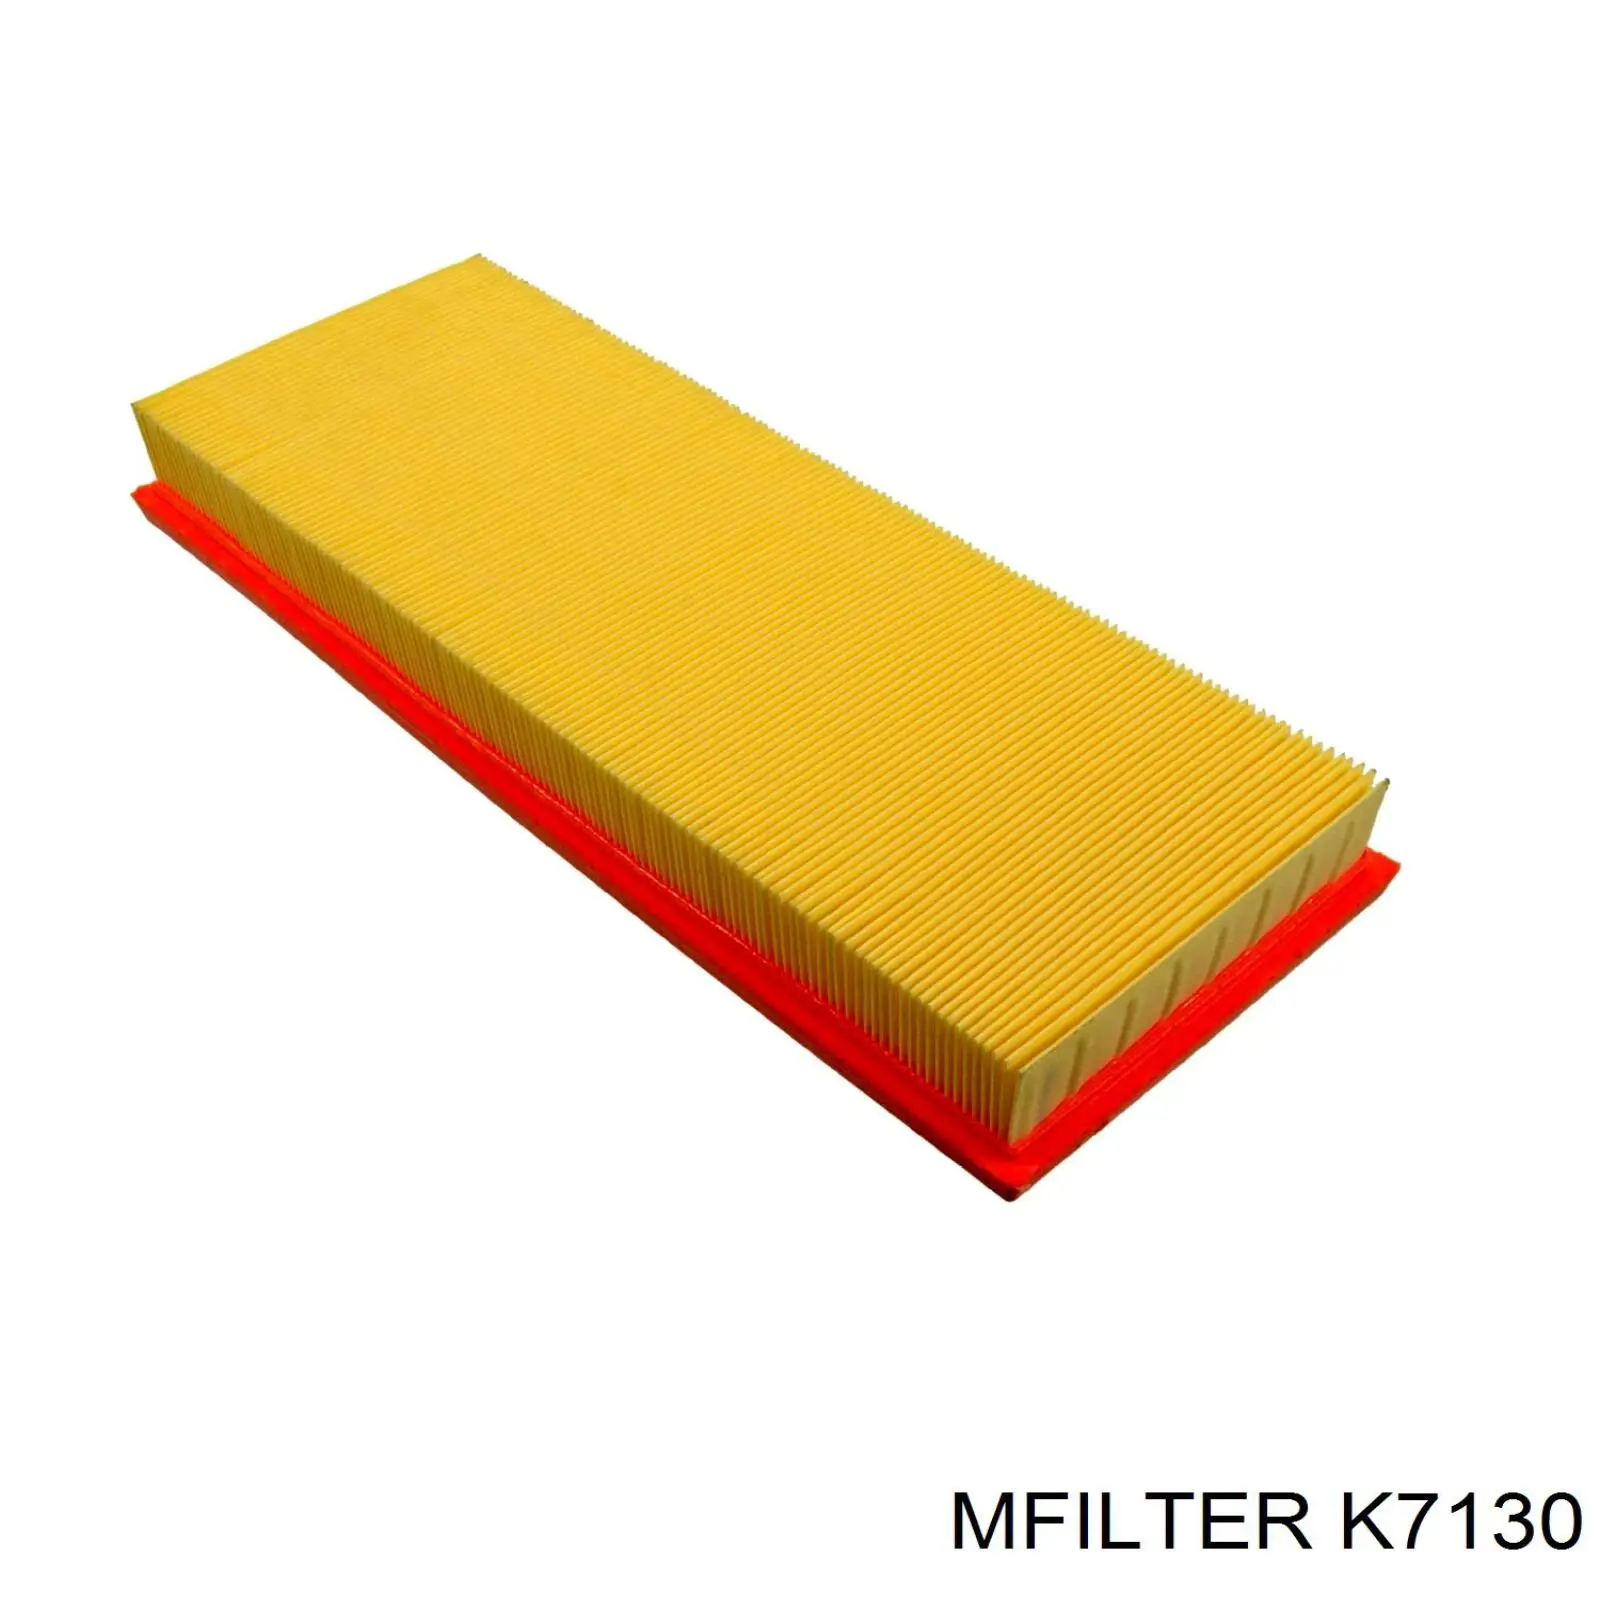 K 7130 Mfilter filtro de aire